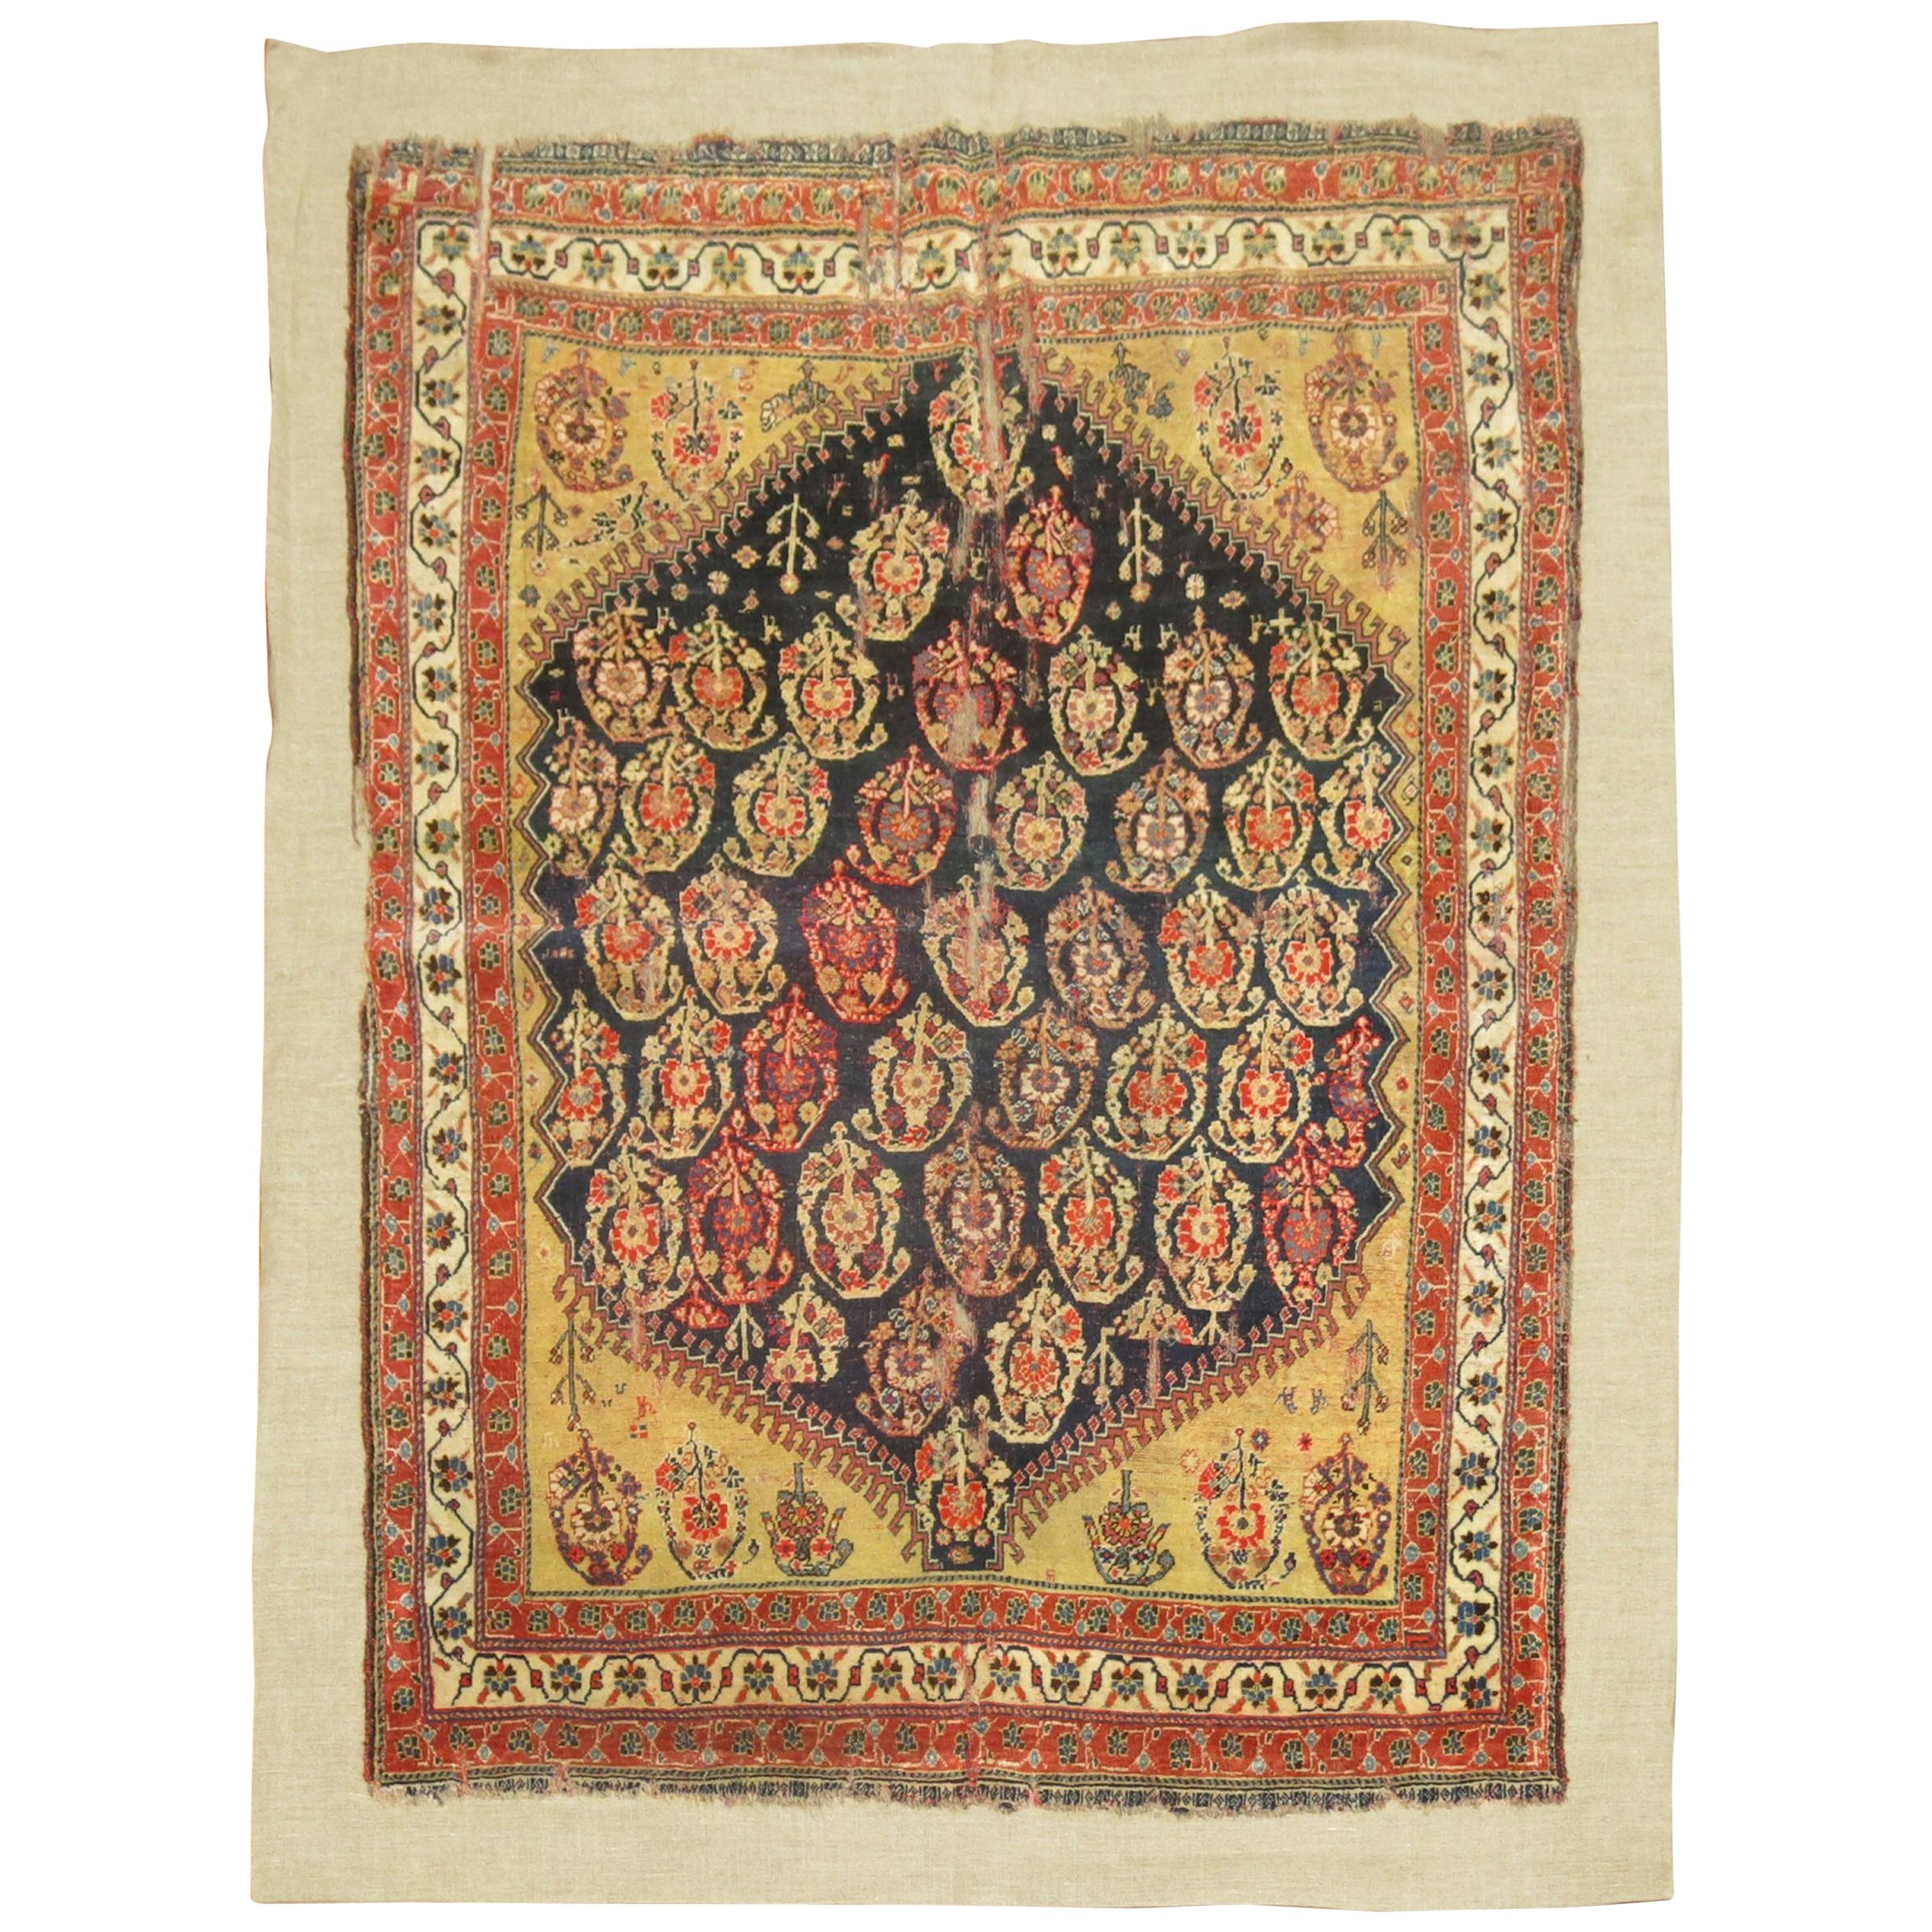 Antique Qashqai Rug Stitched on Linen